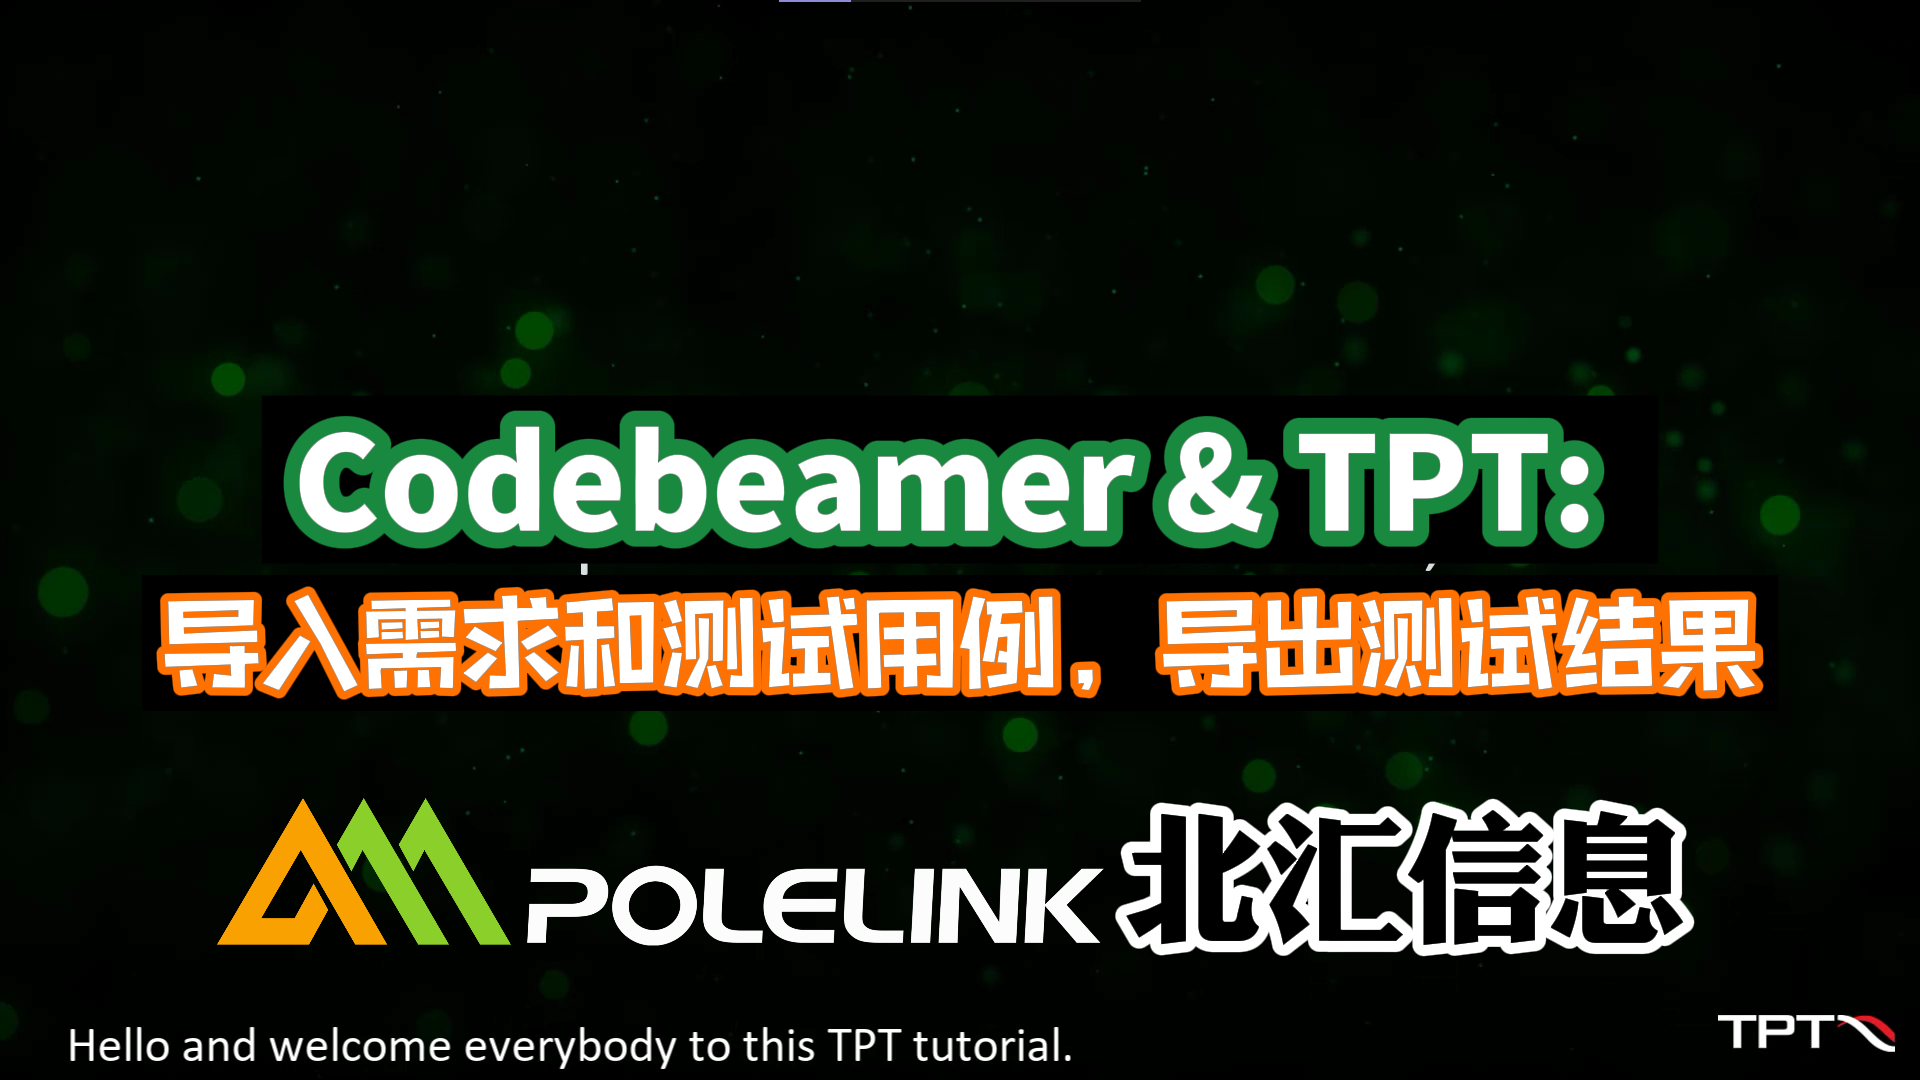 Codebeamer & TPT: 導入需求和測試用例，導出測試結果#TPT
#Codebeamer
 